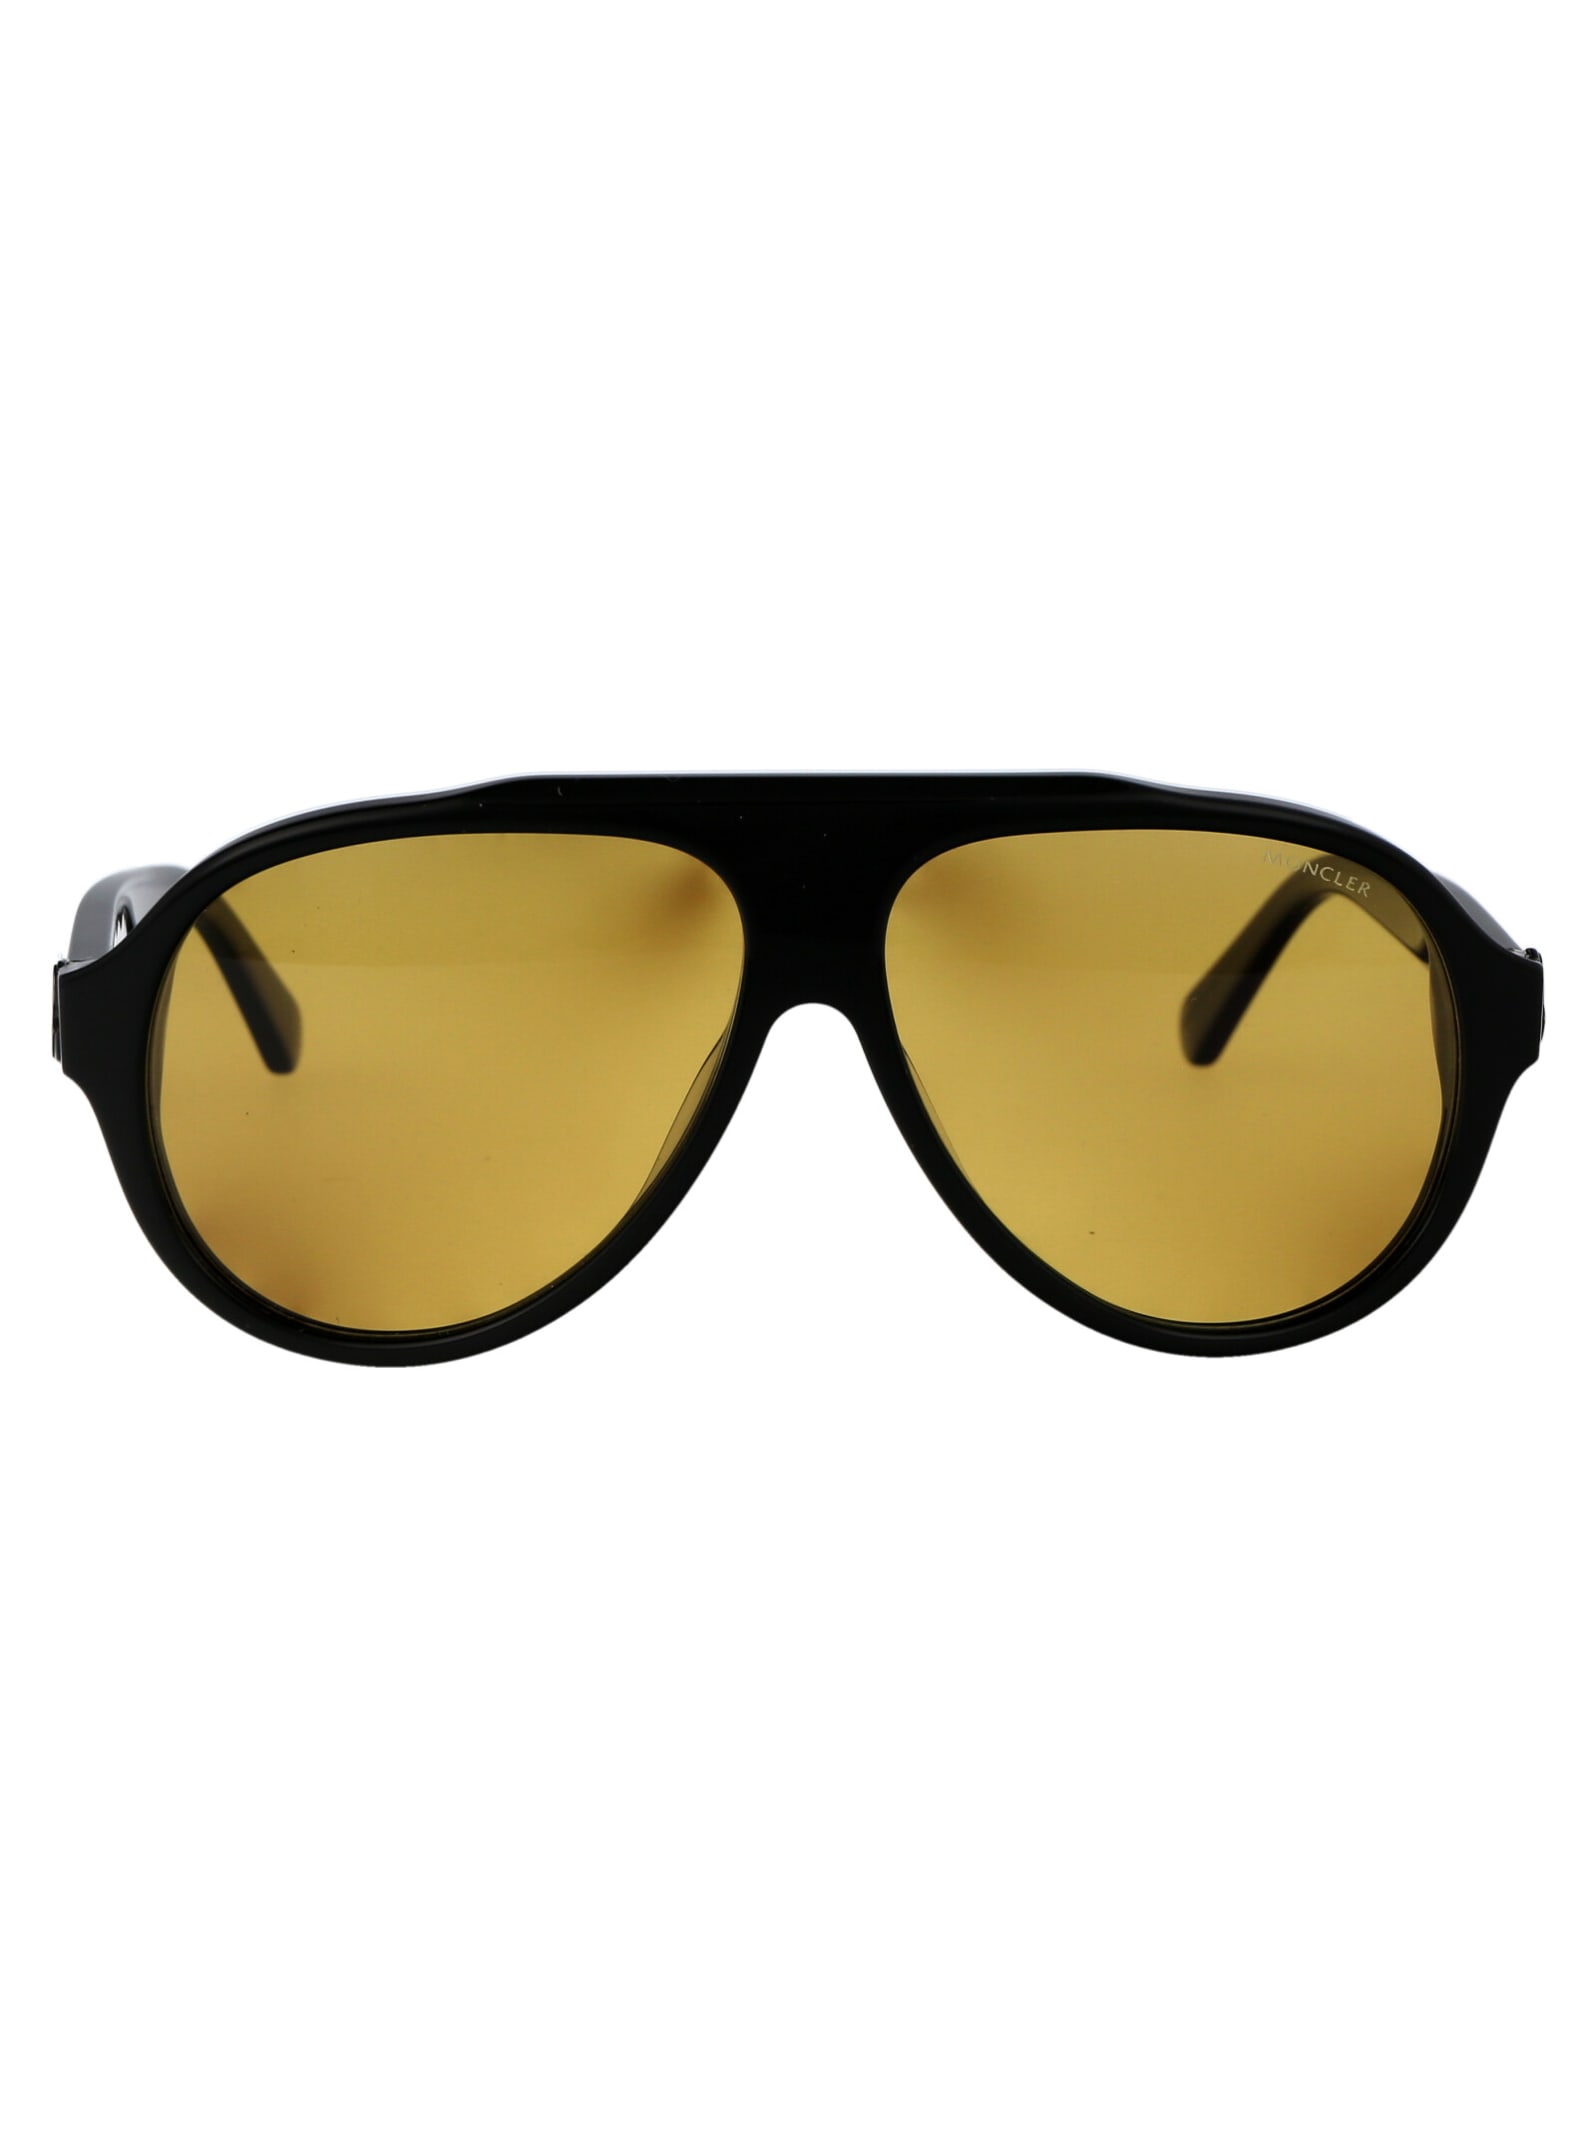 Ml0265 Sunglasses